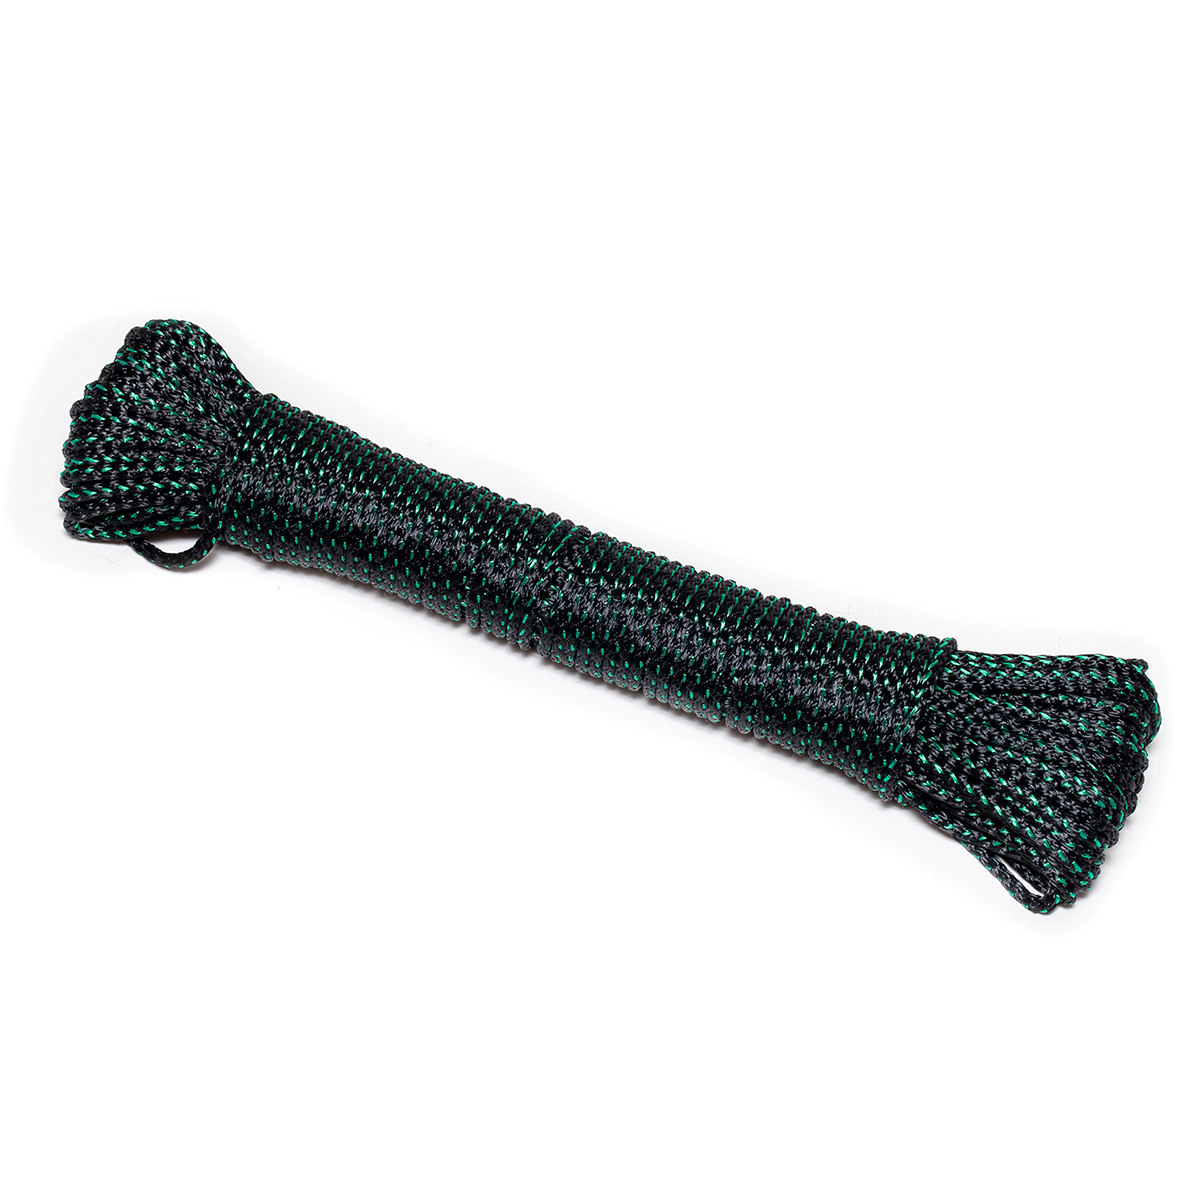 Шнур утяжеляющий Петроканат, 31 м, черно-зеленый, вес 24 г/м шнур для вязания 100% полиэфир 1мм 200м 75±10гр 18 джинс